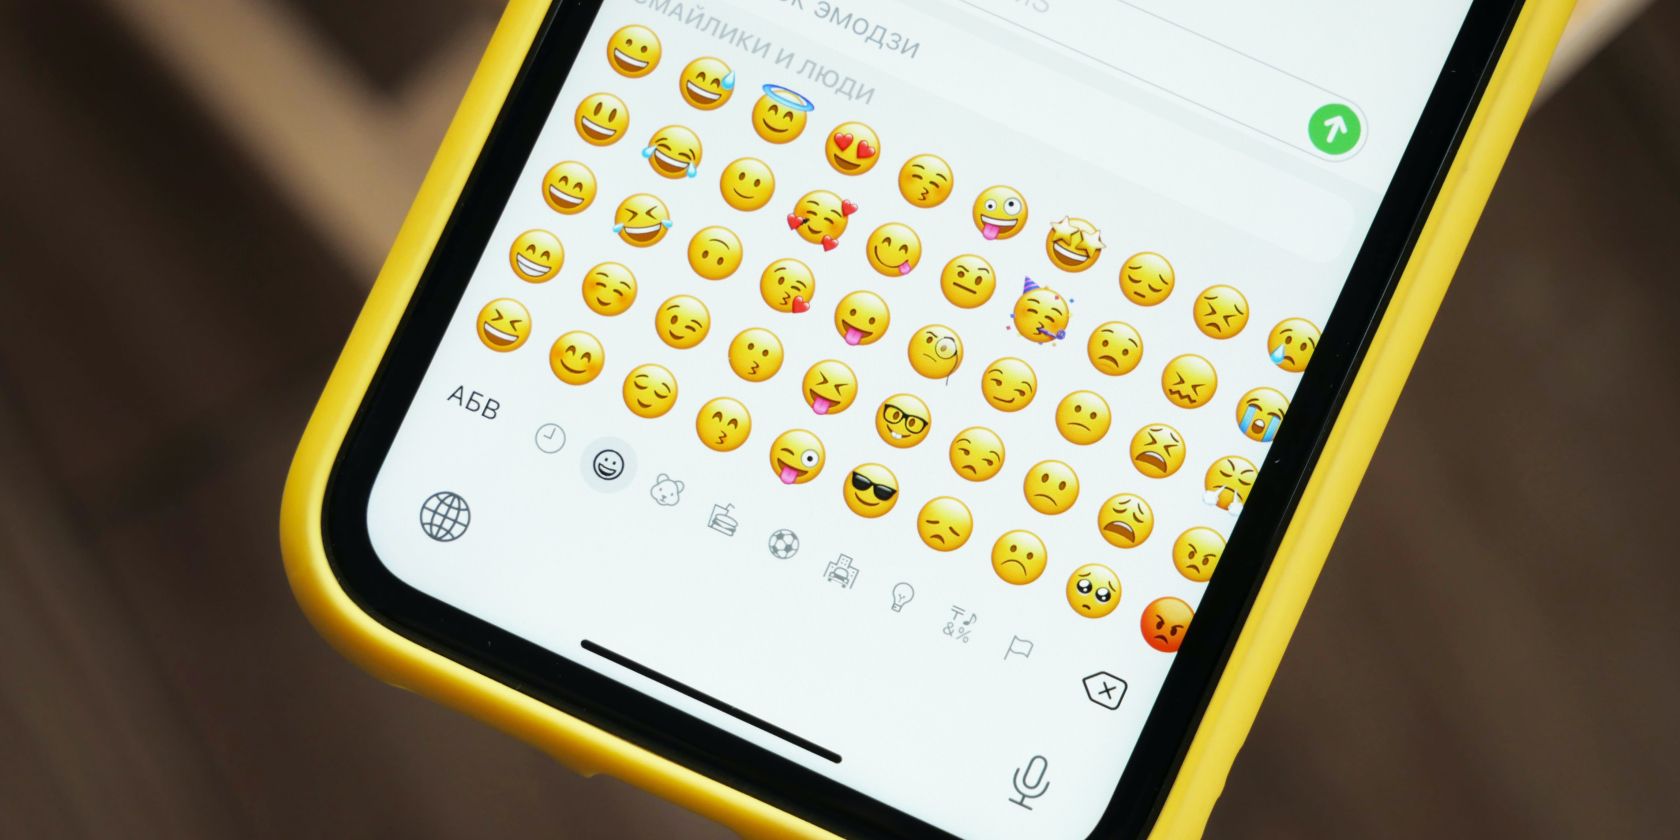 emojis on a phone